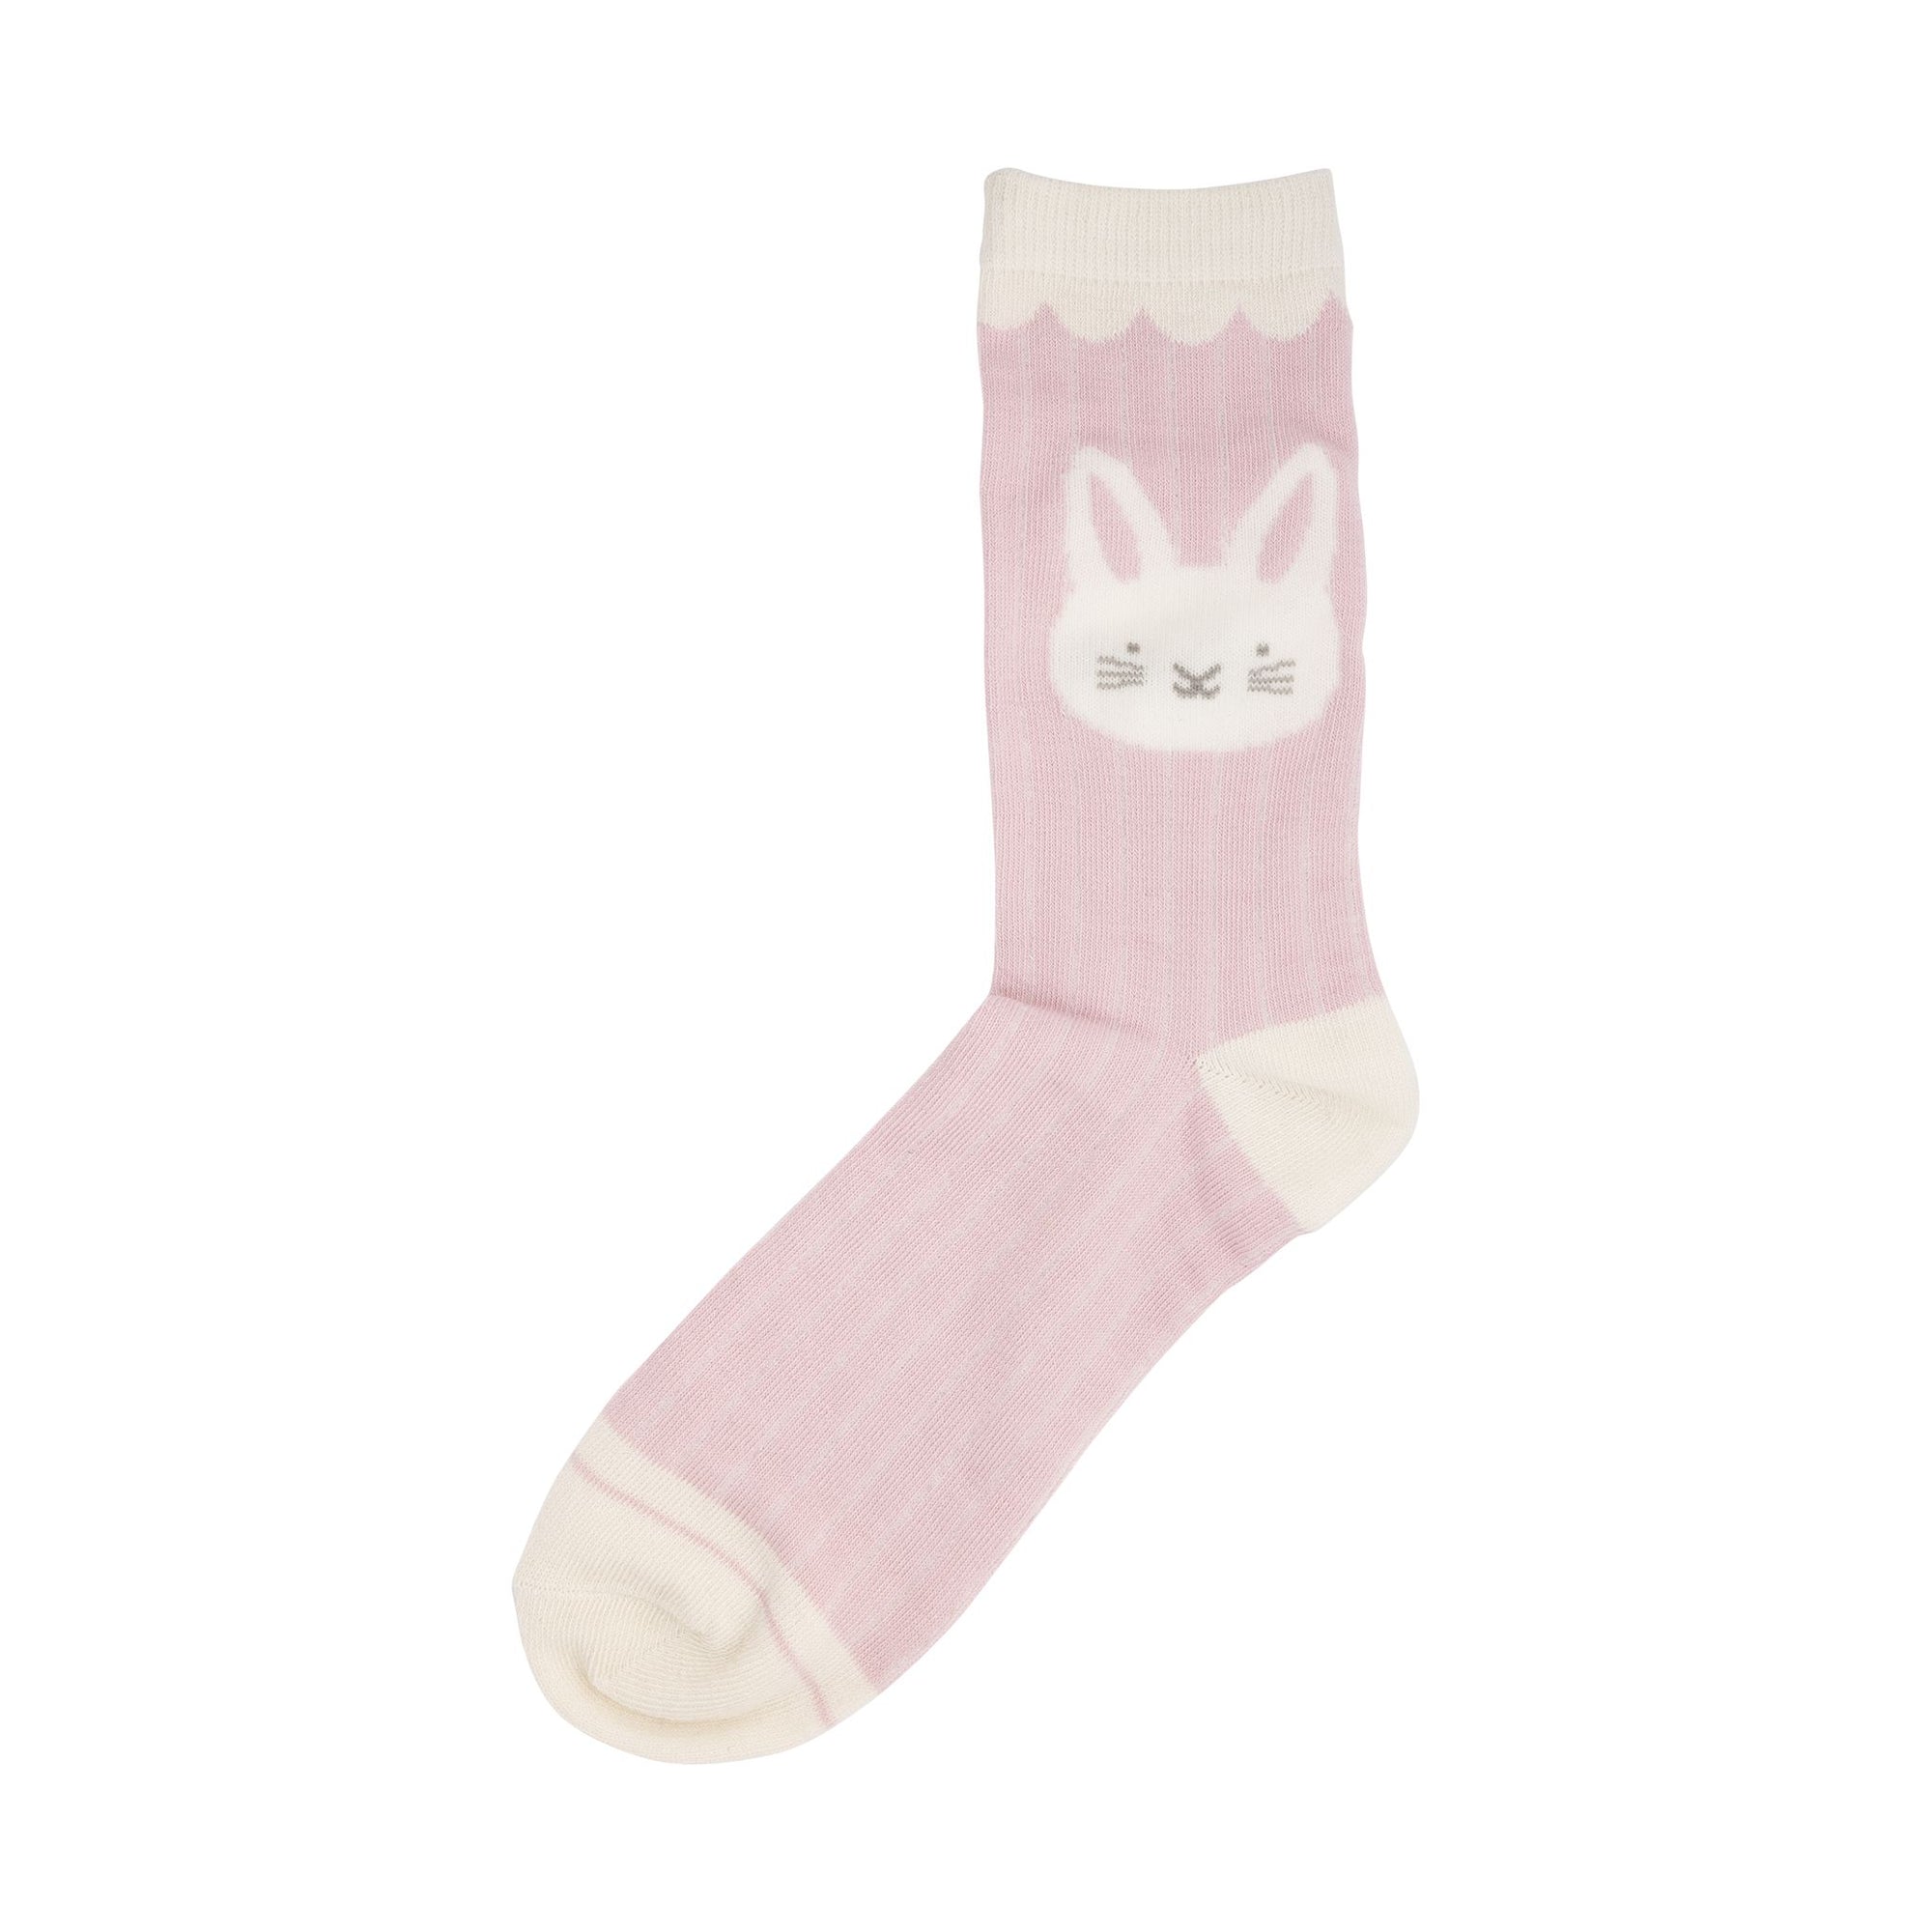 Bunny Socks - The Preppy Bunny